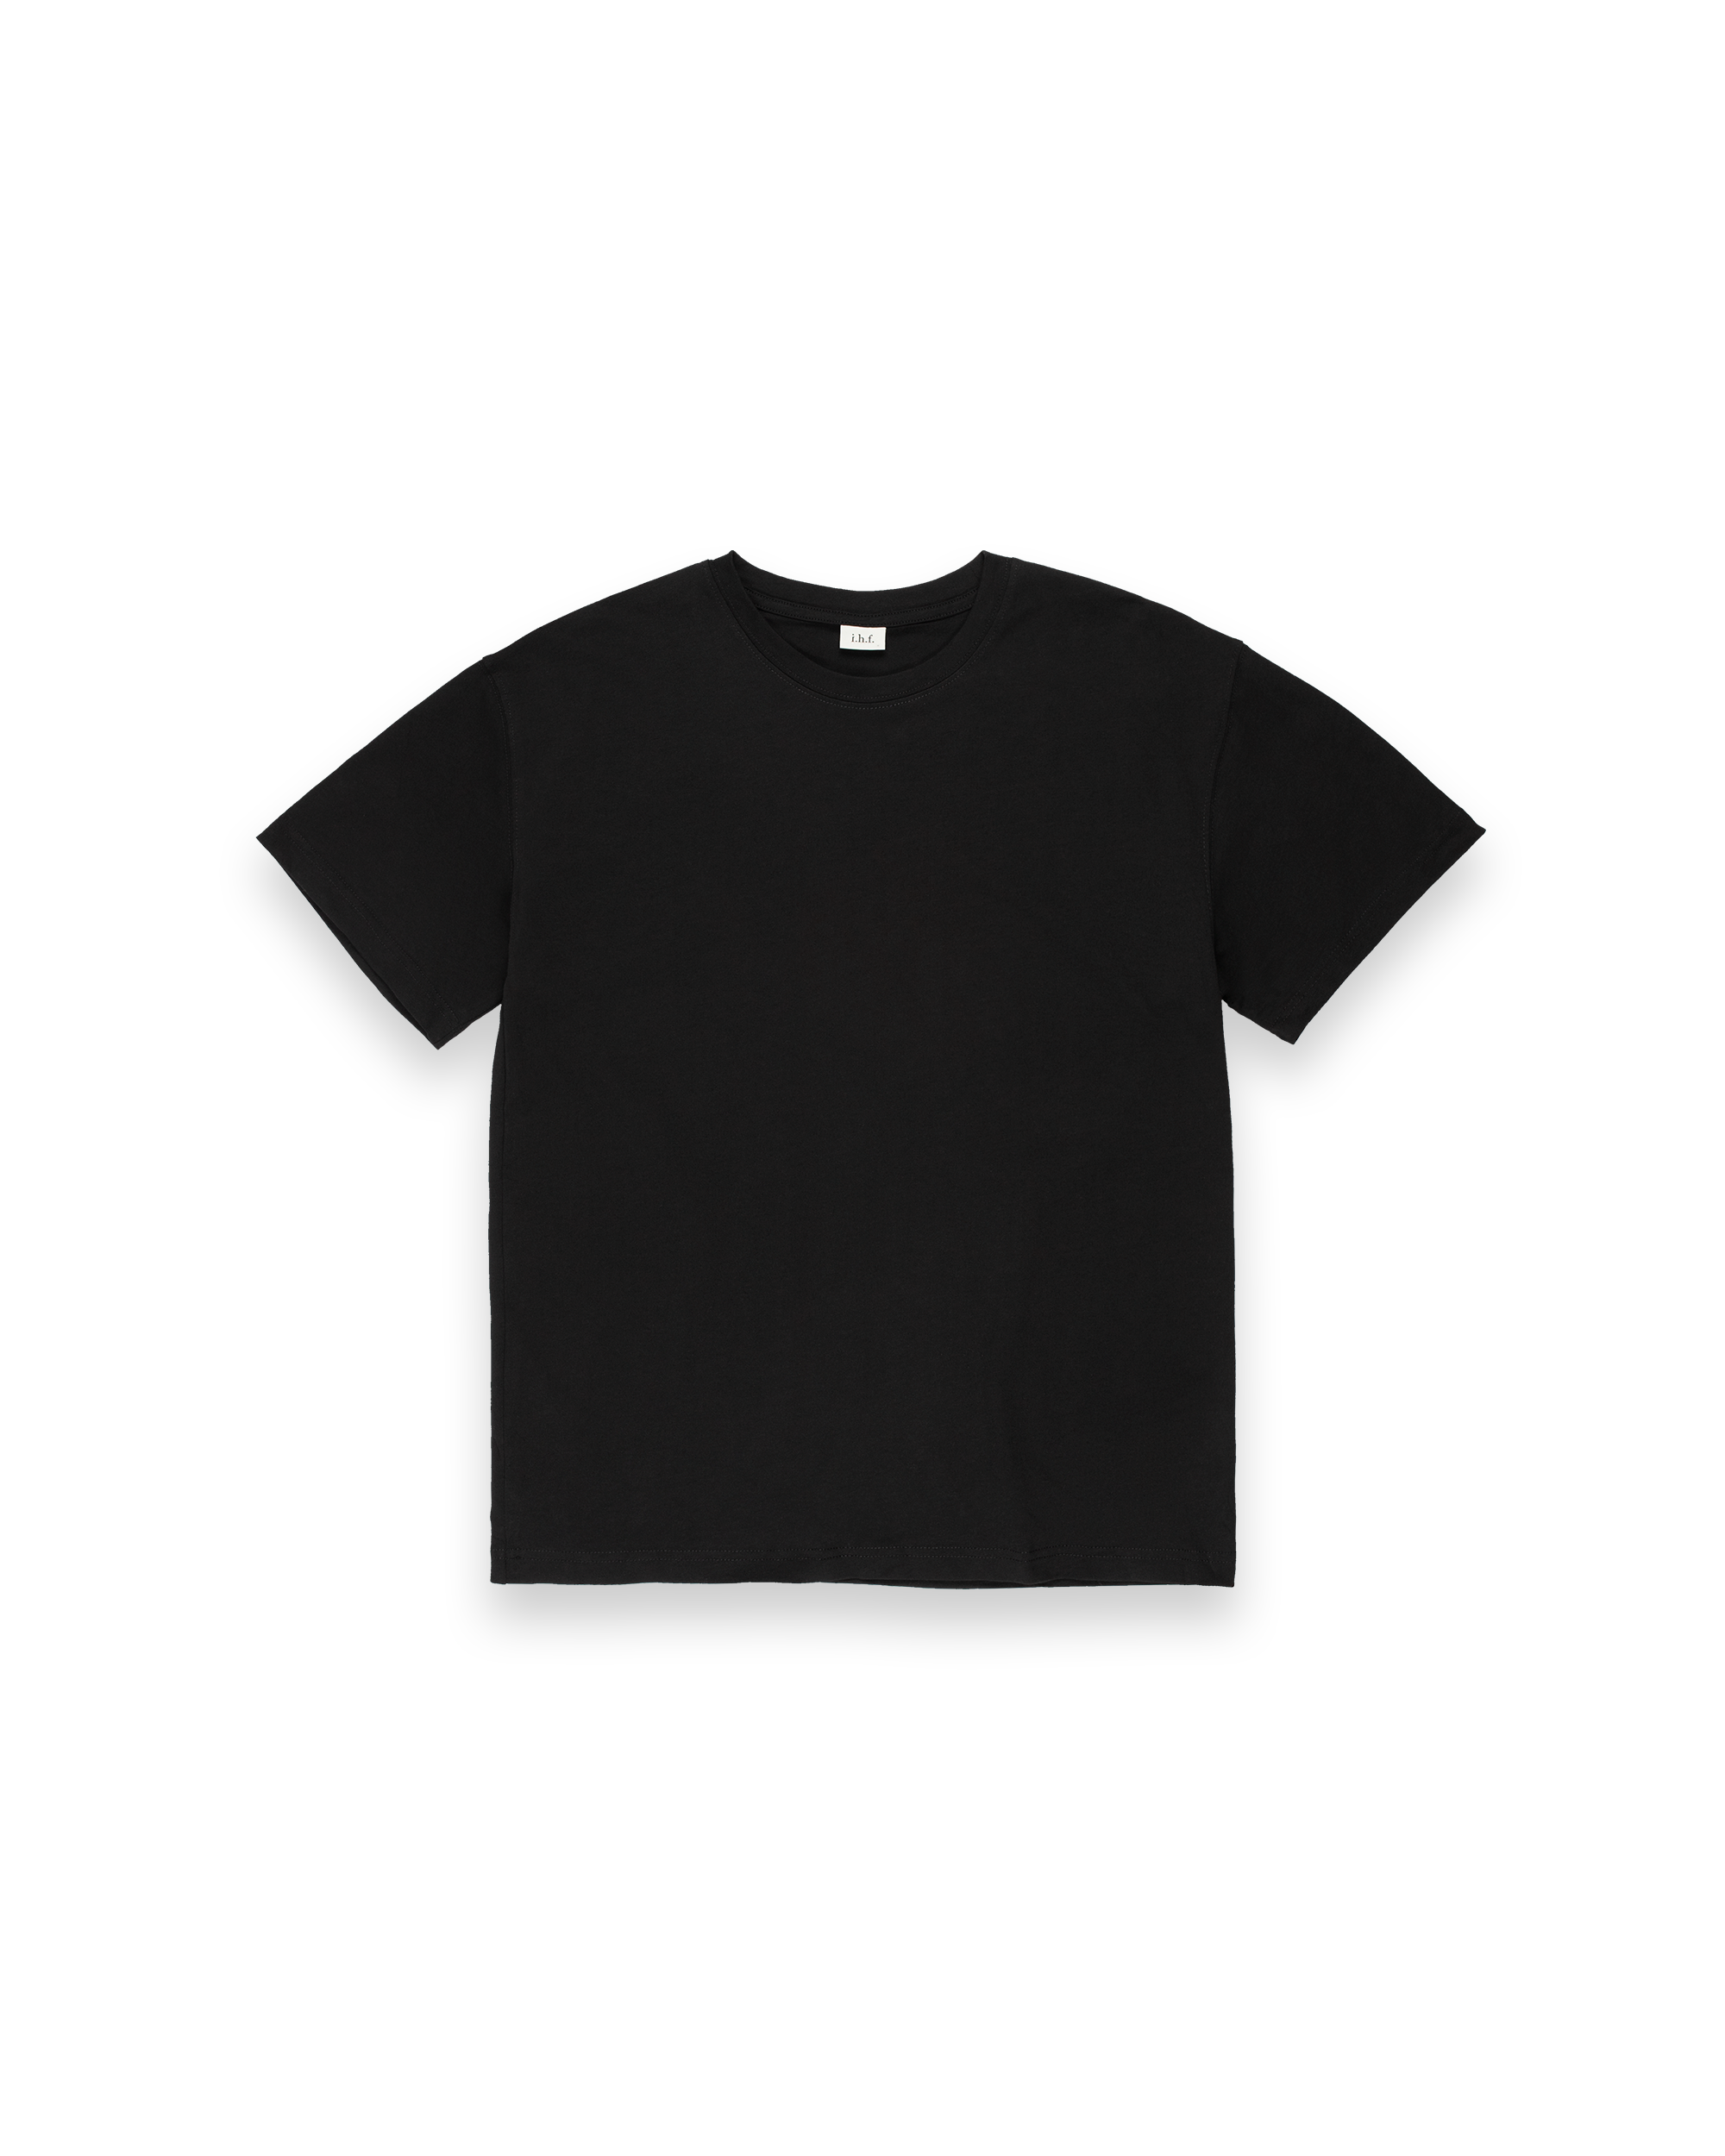 'triple black' t-shirt